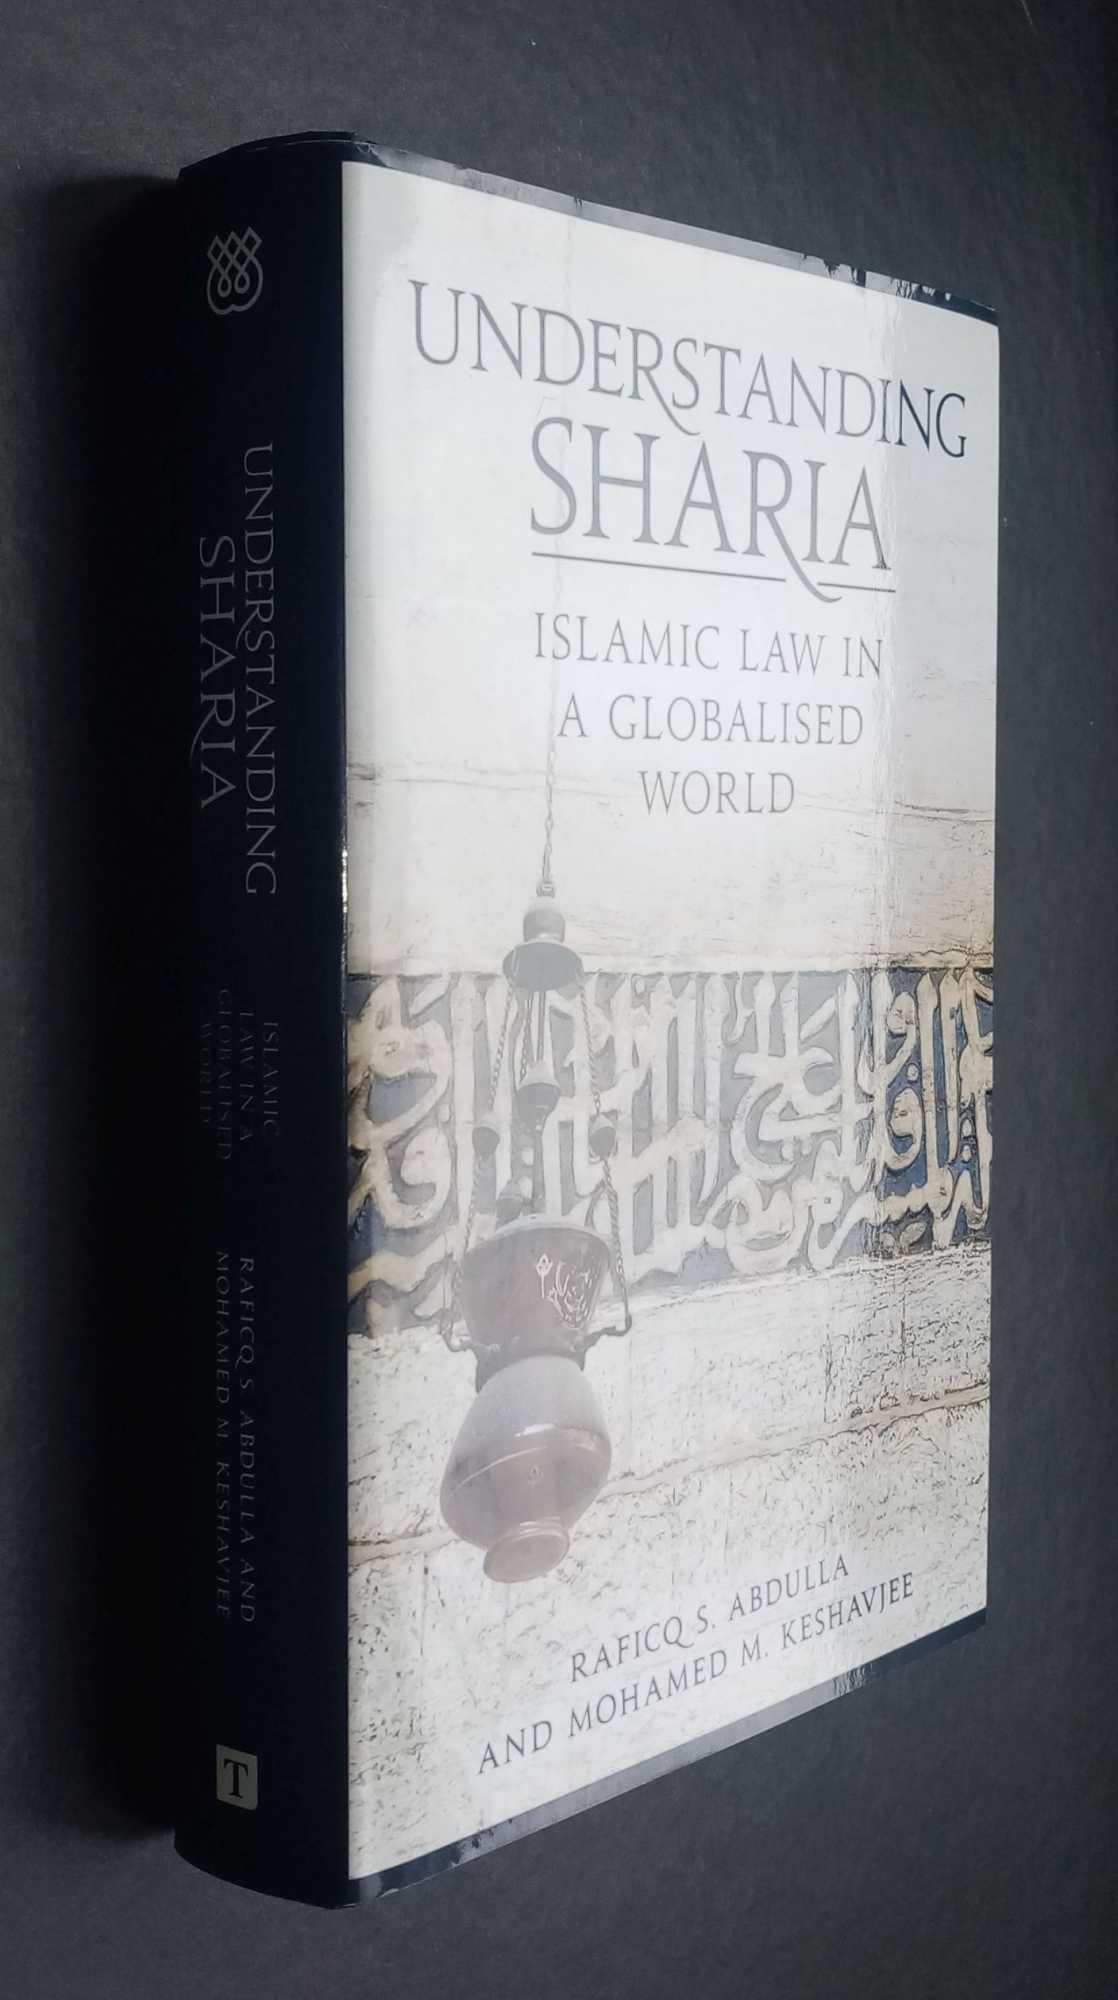 Raficq S Abdulla - Understanding Sharia: Islamic Law in a Globalised World